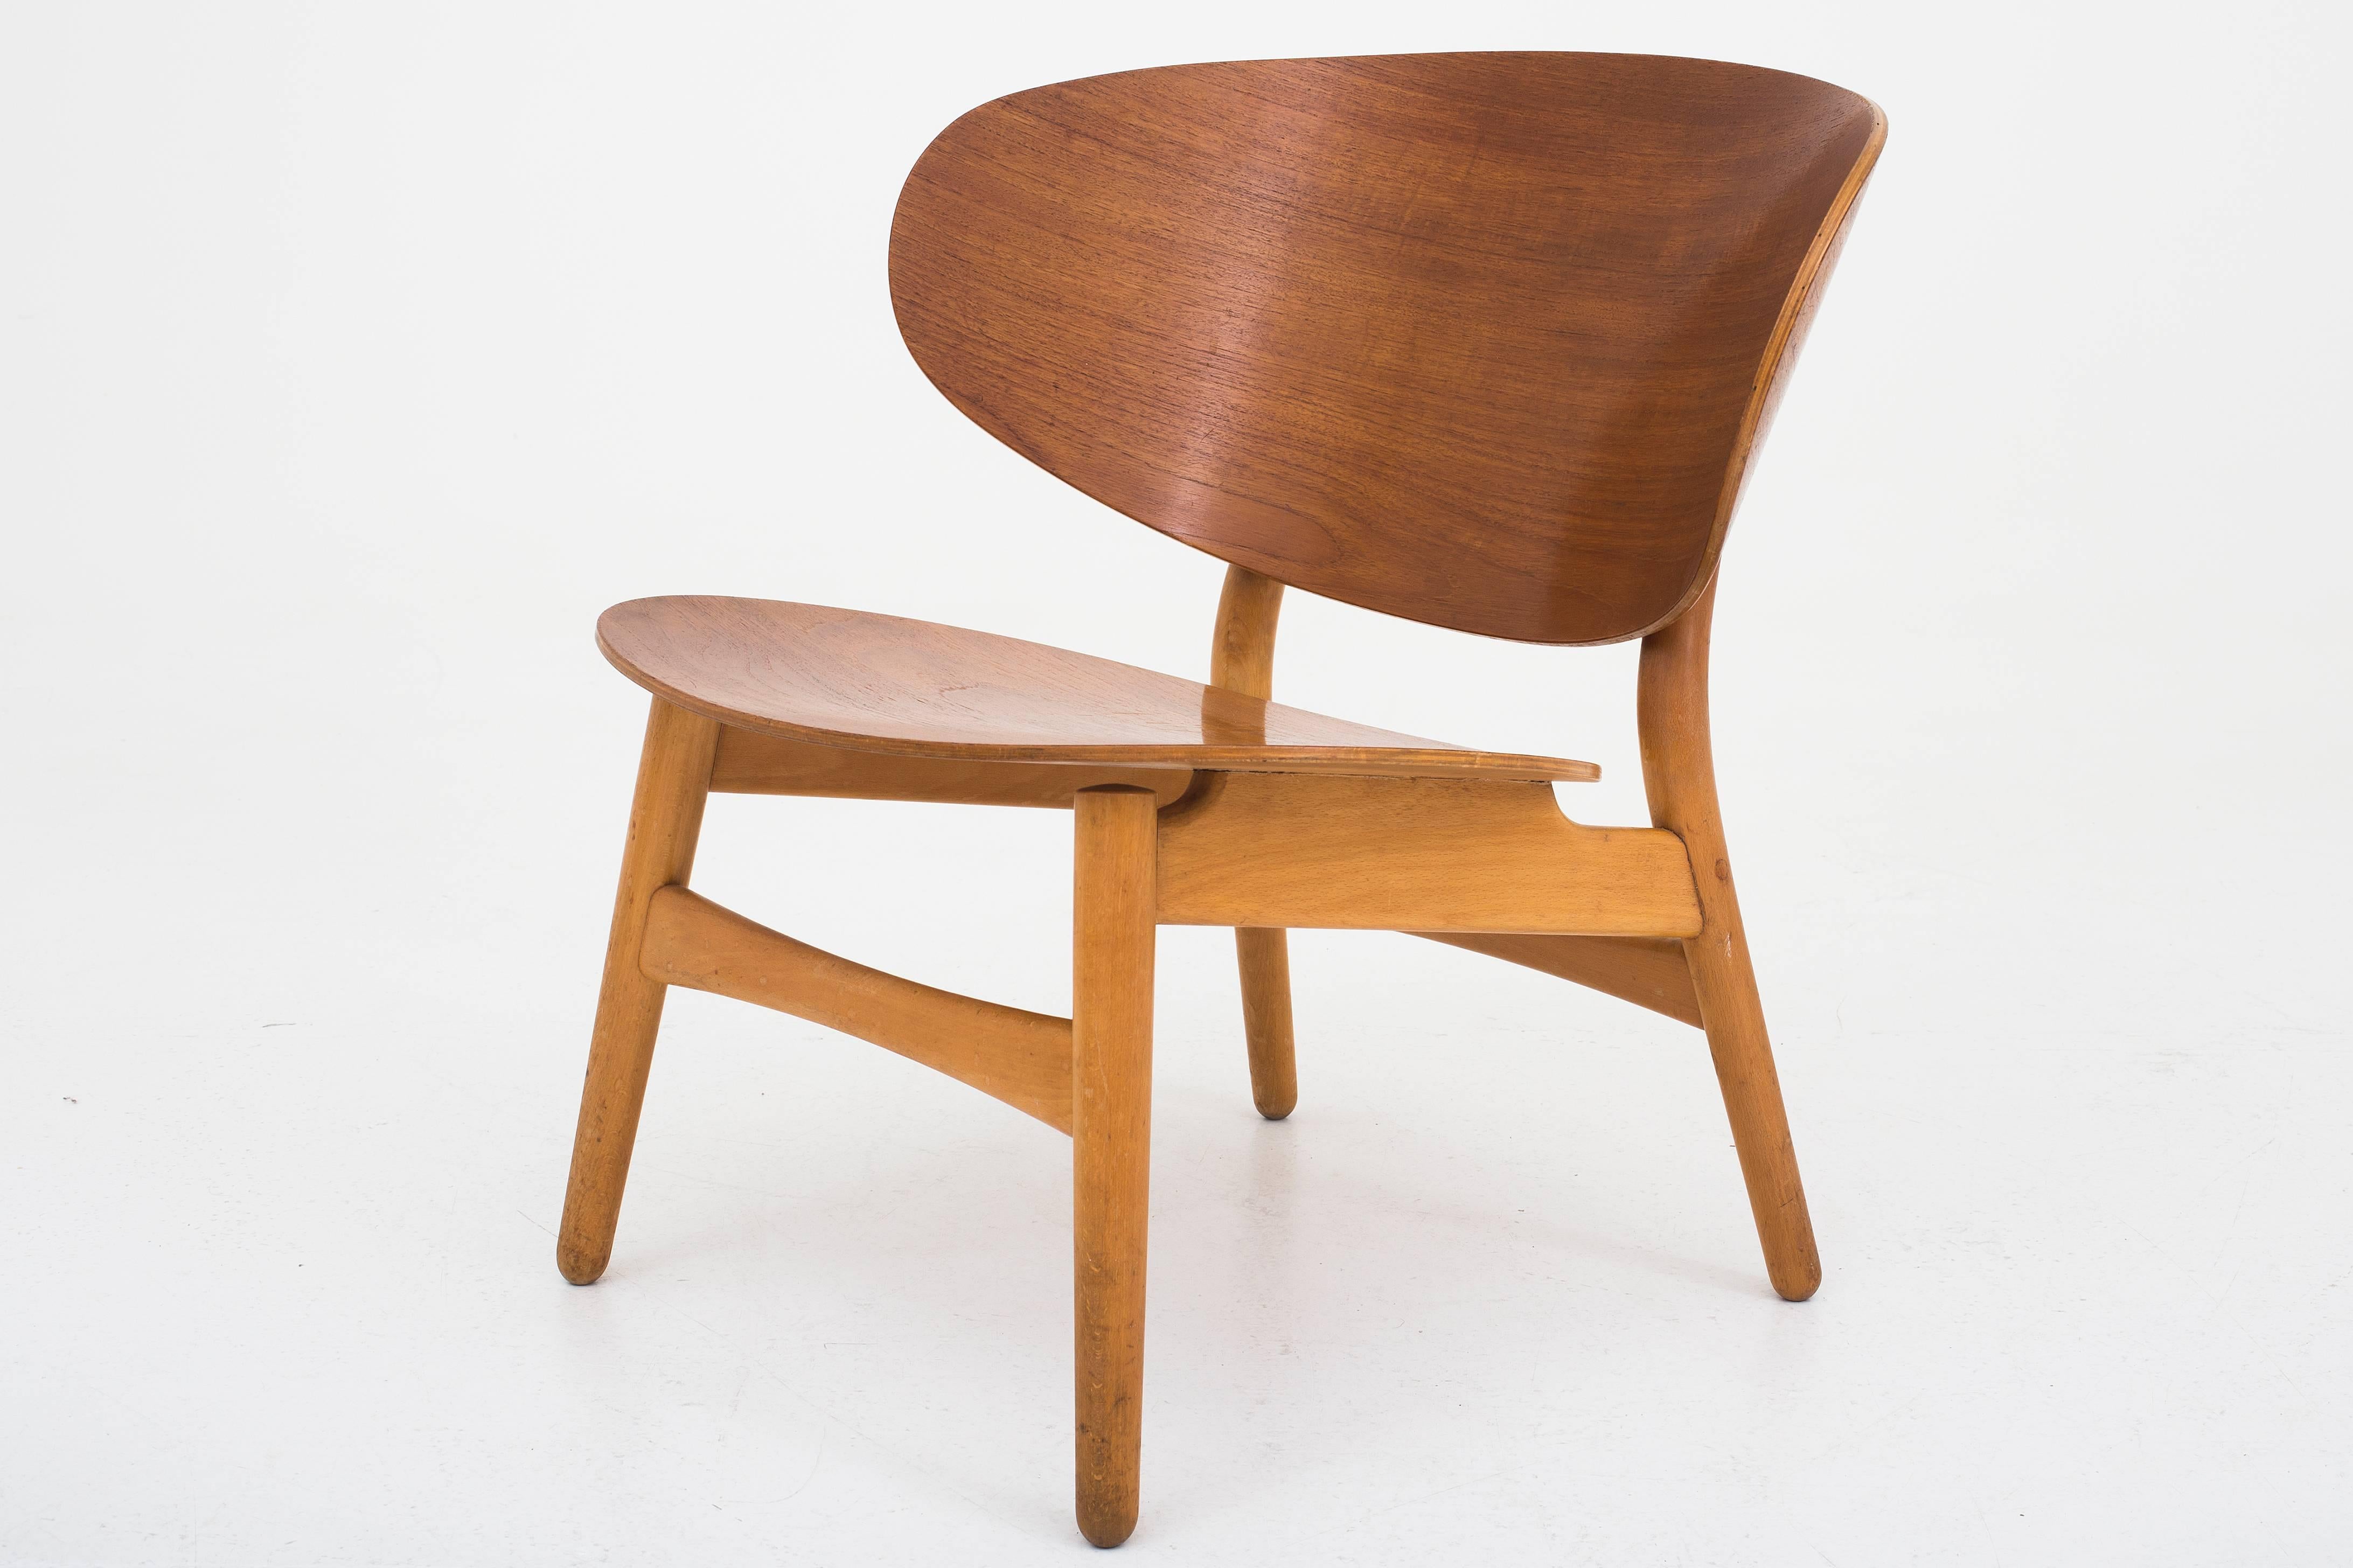 Shell chair in laminated teak and beech designed by Hans J. Wegner. Maker Fritz Hansen.